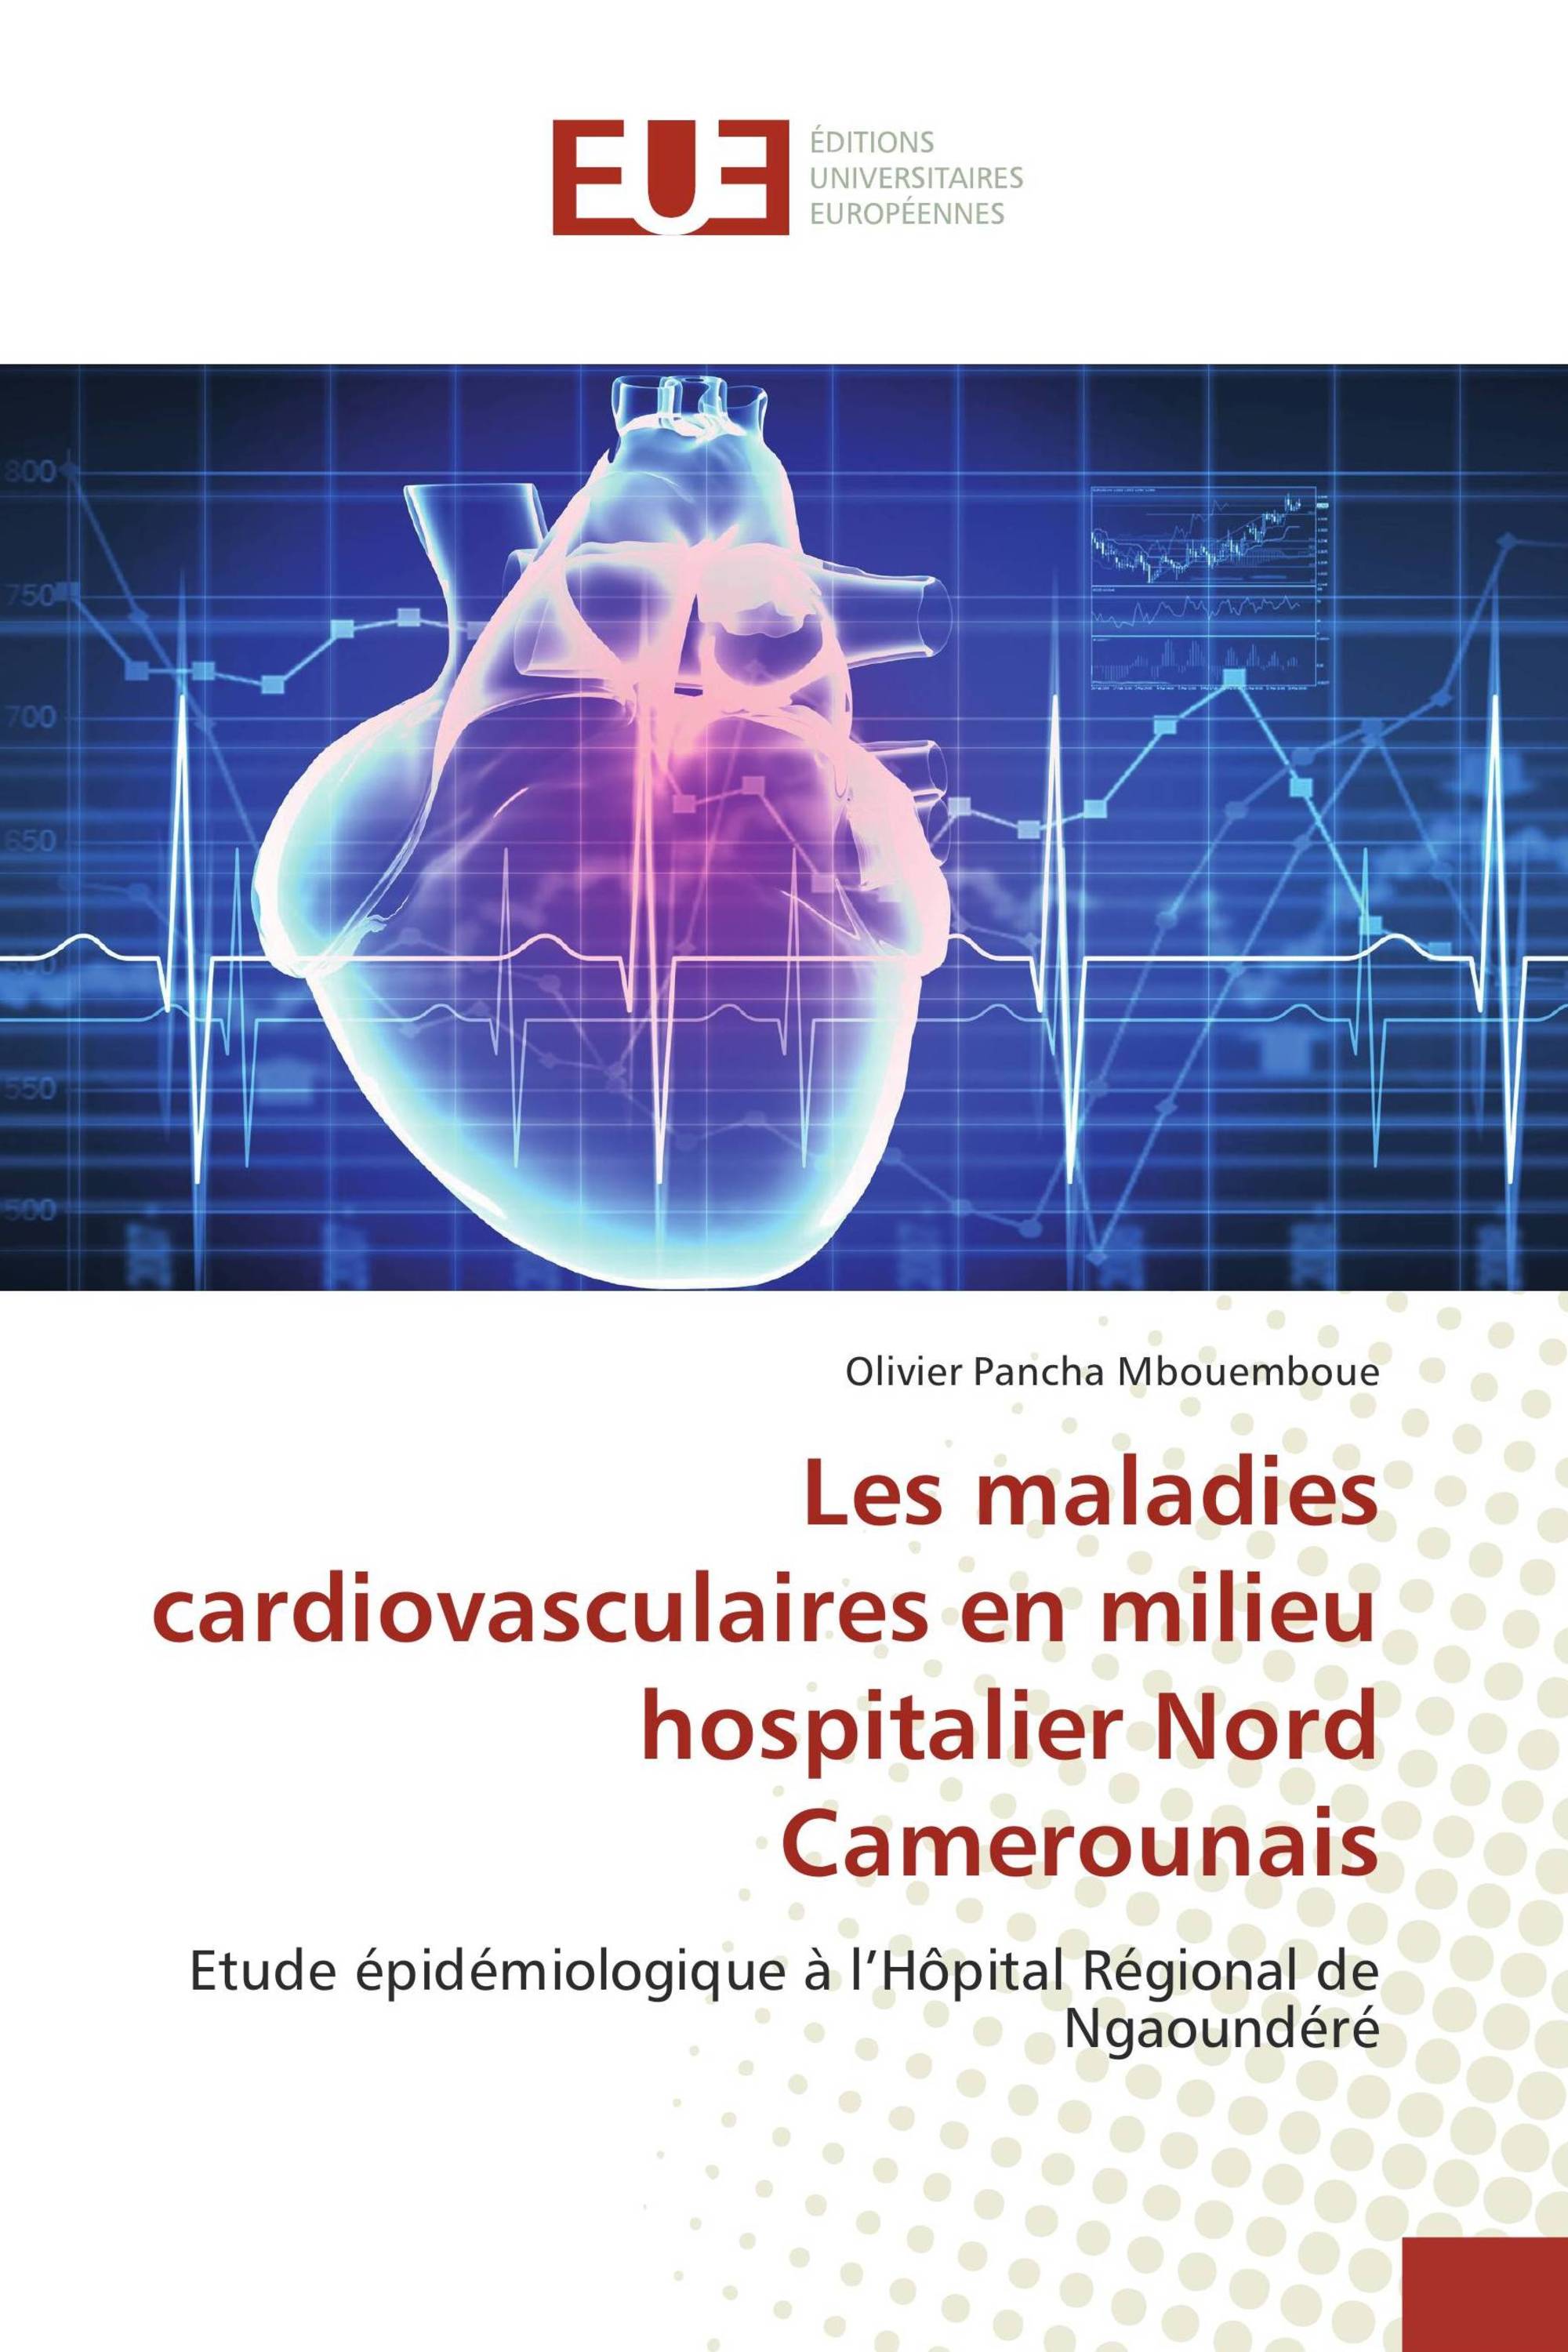 Les maladies cardiovasculaires en milieu hospitalier Nord Camerounais